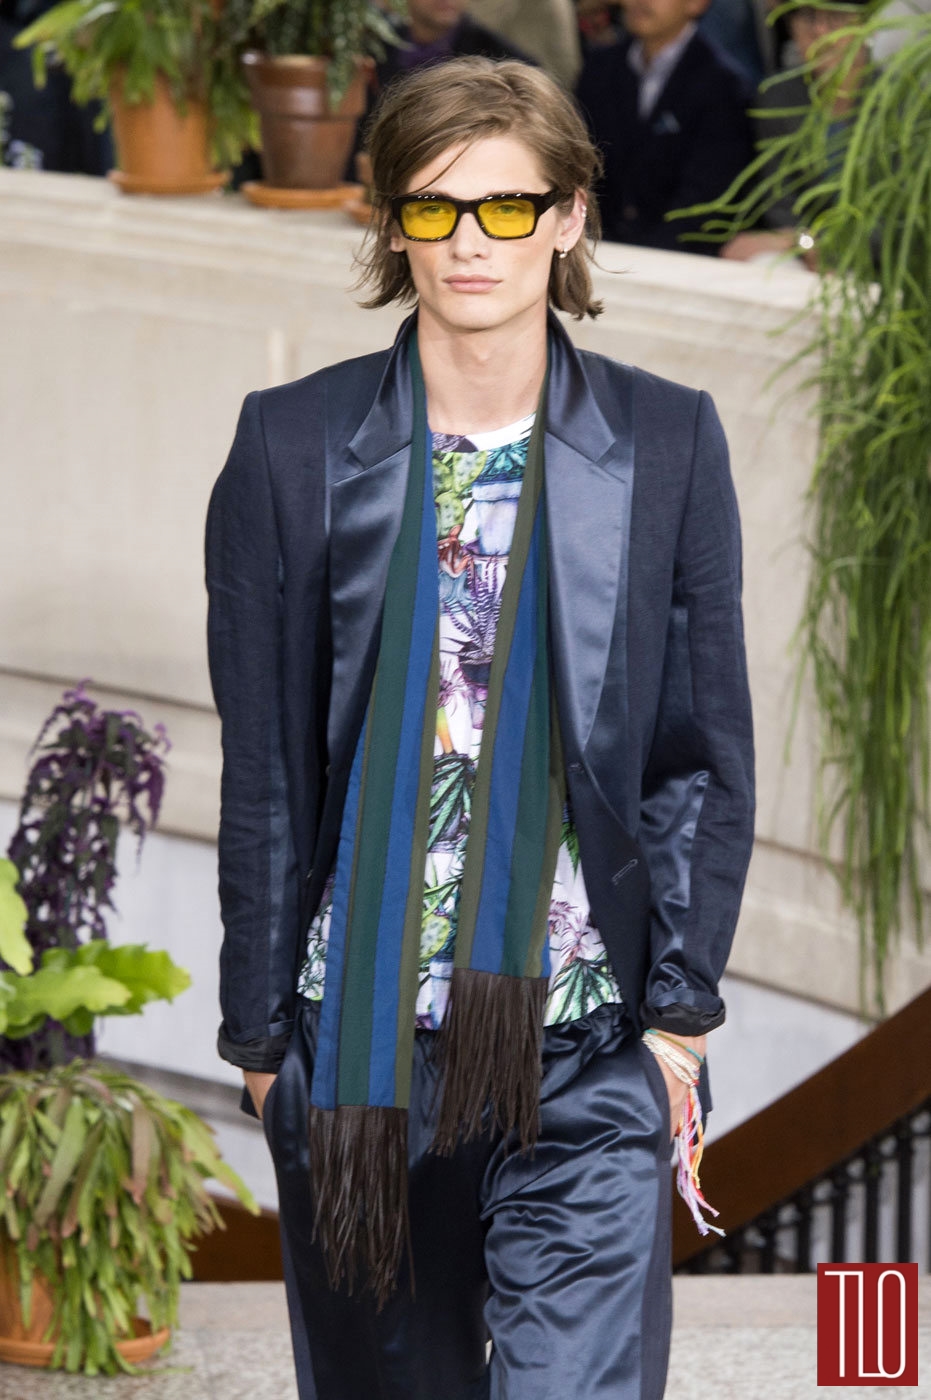 Paul-Smith-Spring-2015-Menswear-Collection-Paris-Fashion-Week-Tom-Lorenzo-Site-TLO (1)